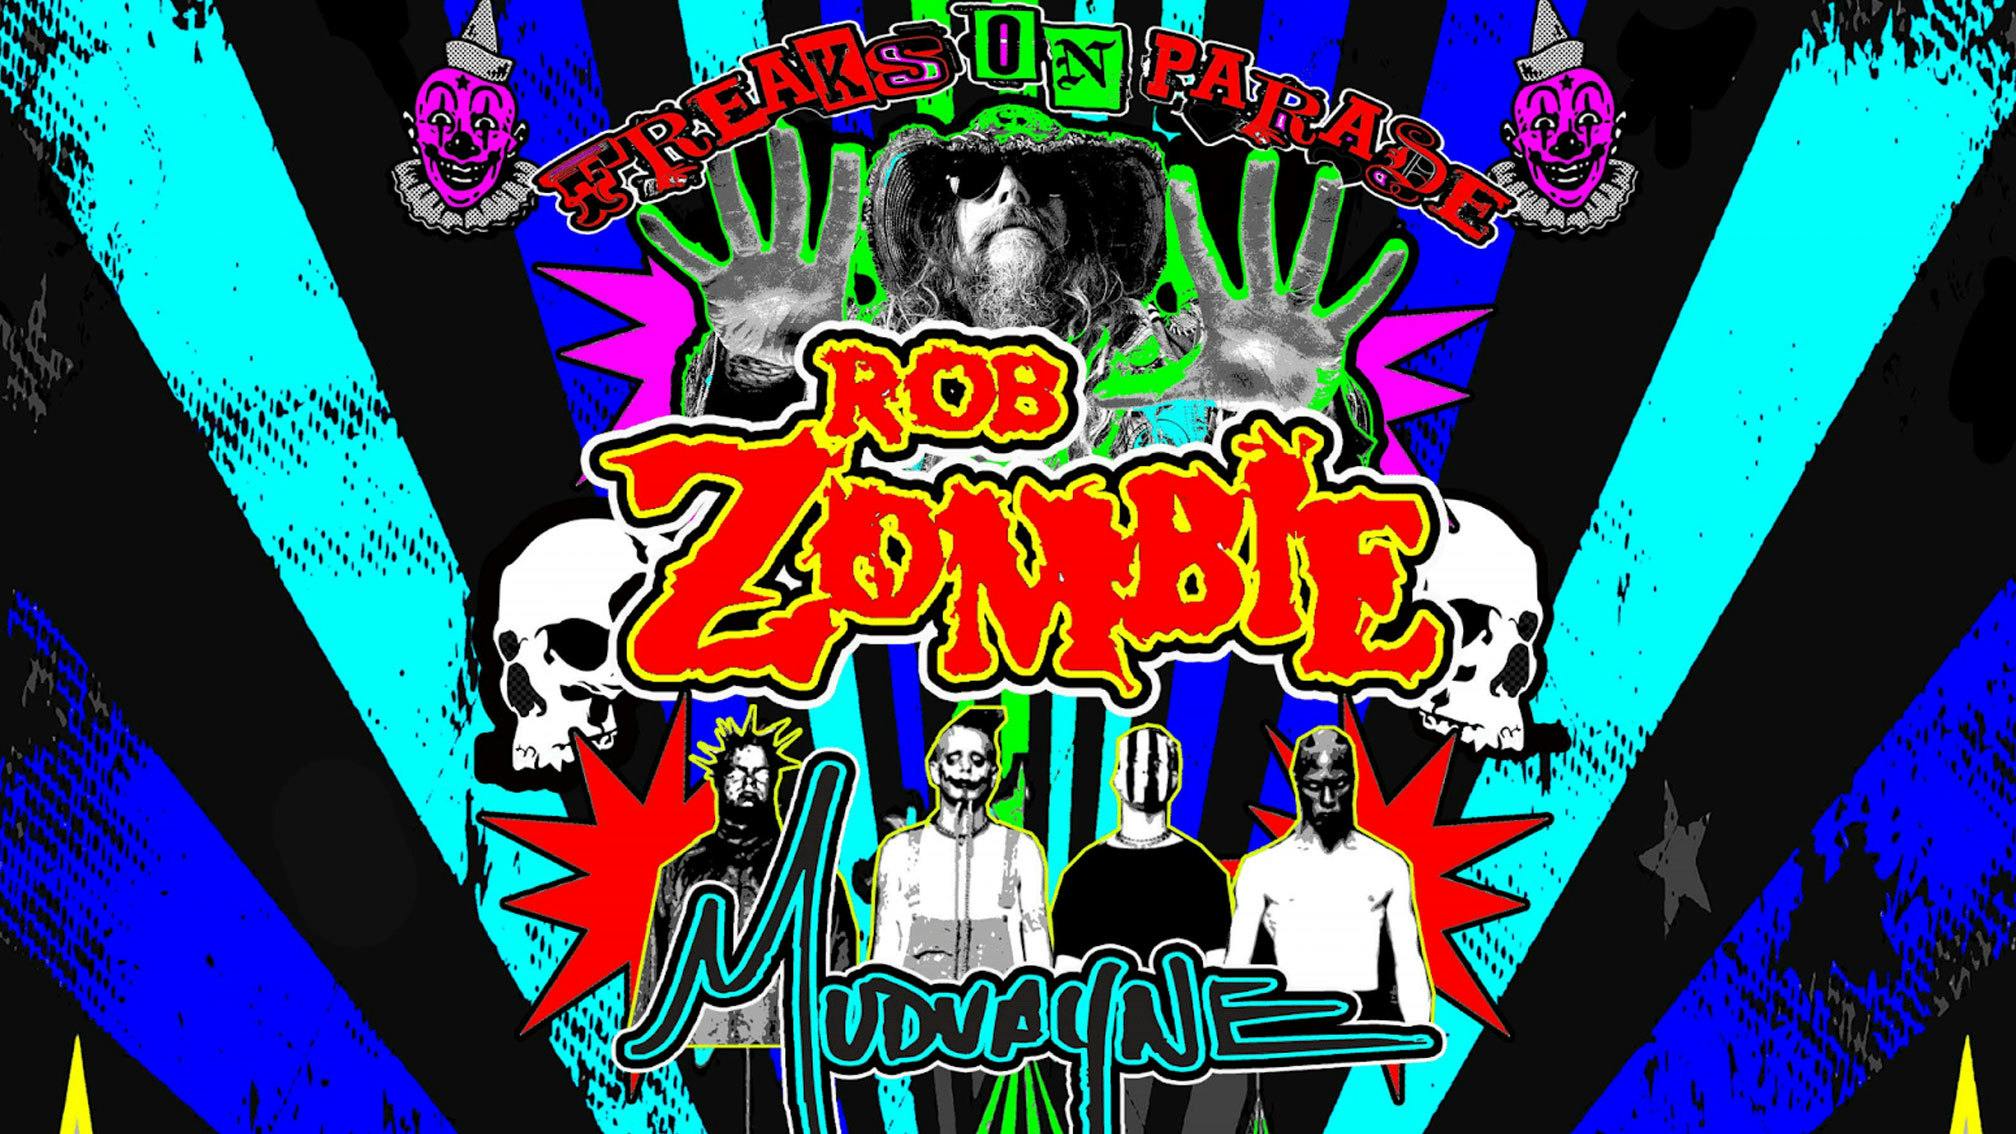 Rob Zombie and Mudvayne announce U.S. tour with Static-X and Powerman 5000